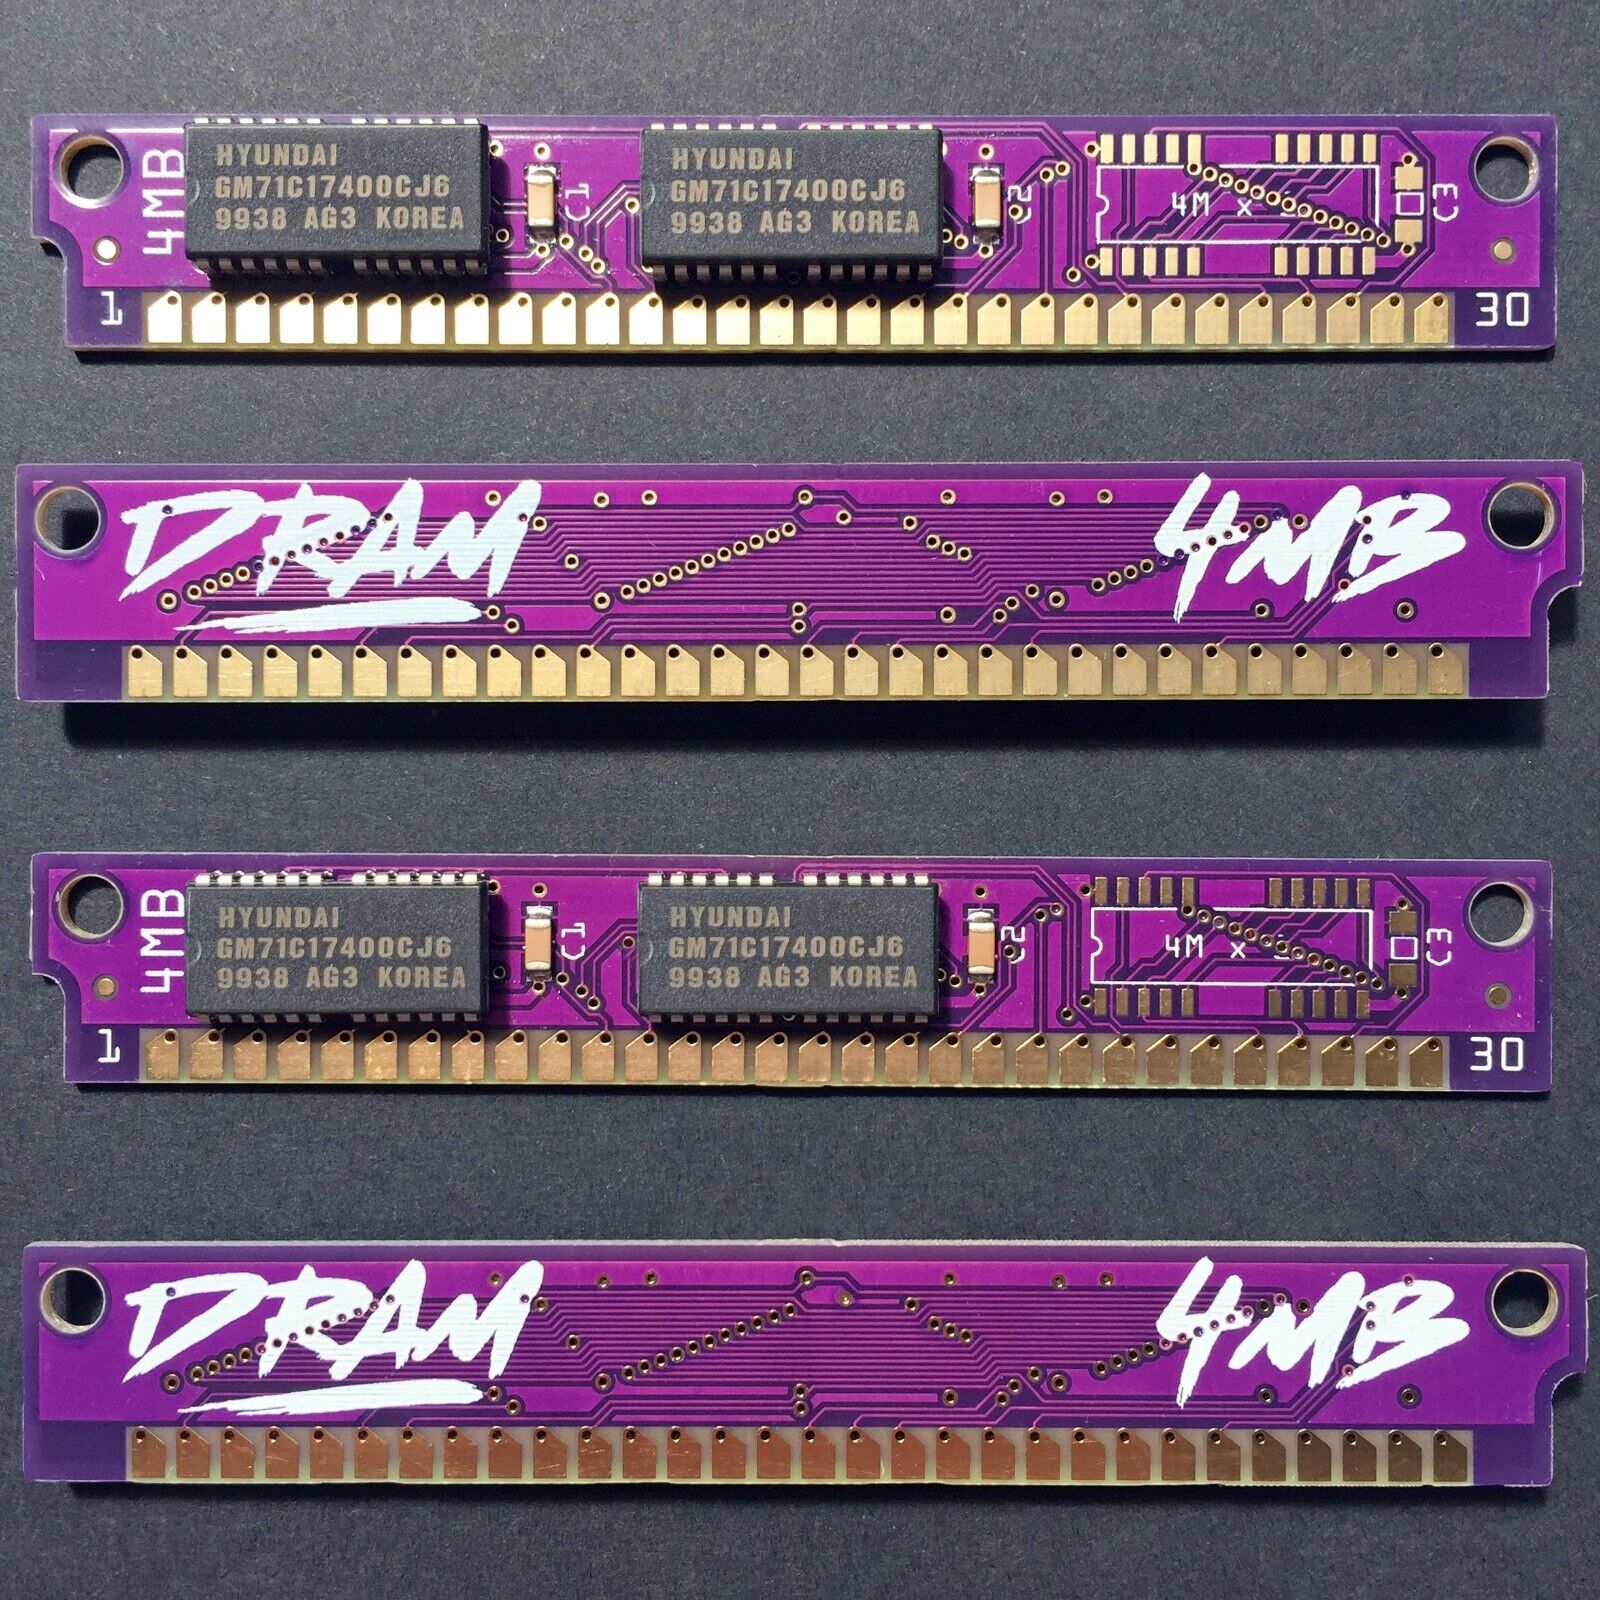 4pcs PurpleRAM new 16MB kit (4x4MB) 60ns 30pin SIMM low profile memory modules